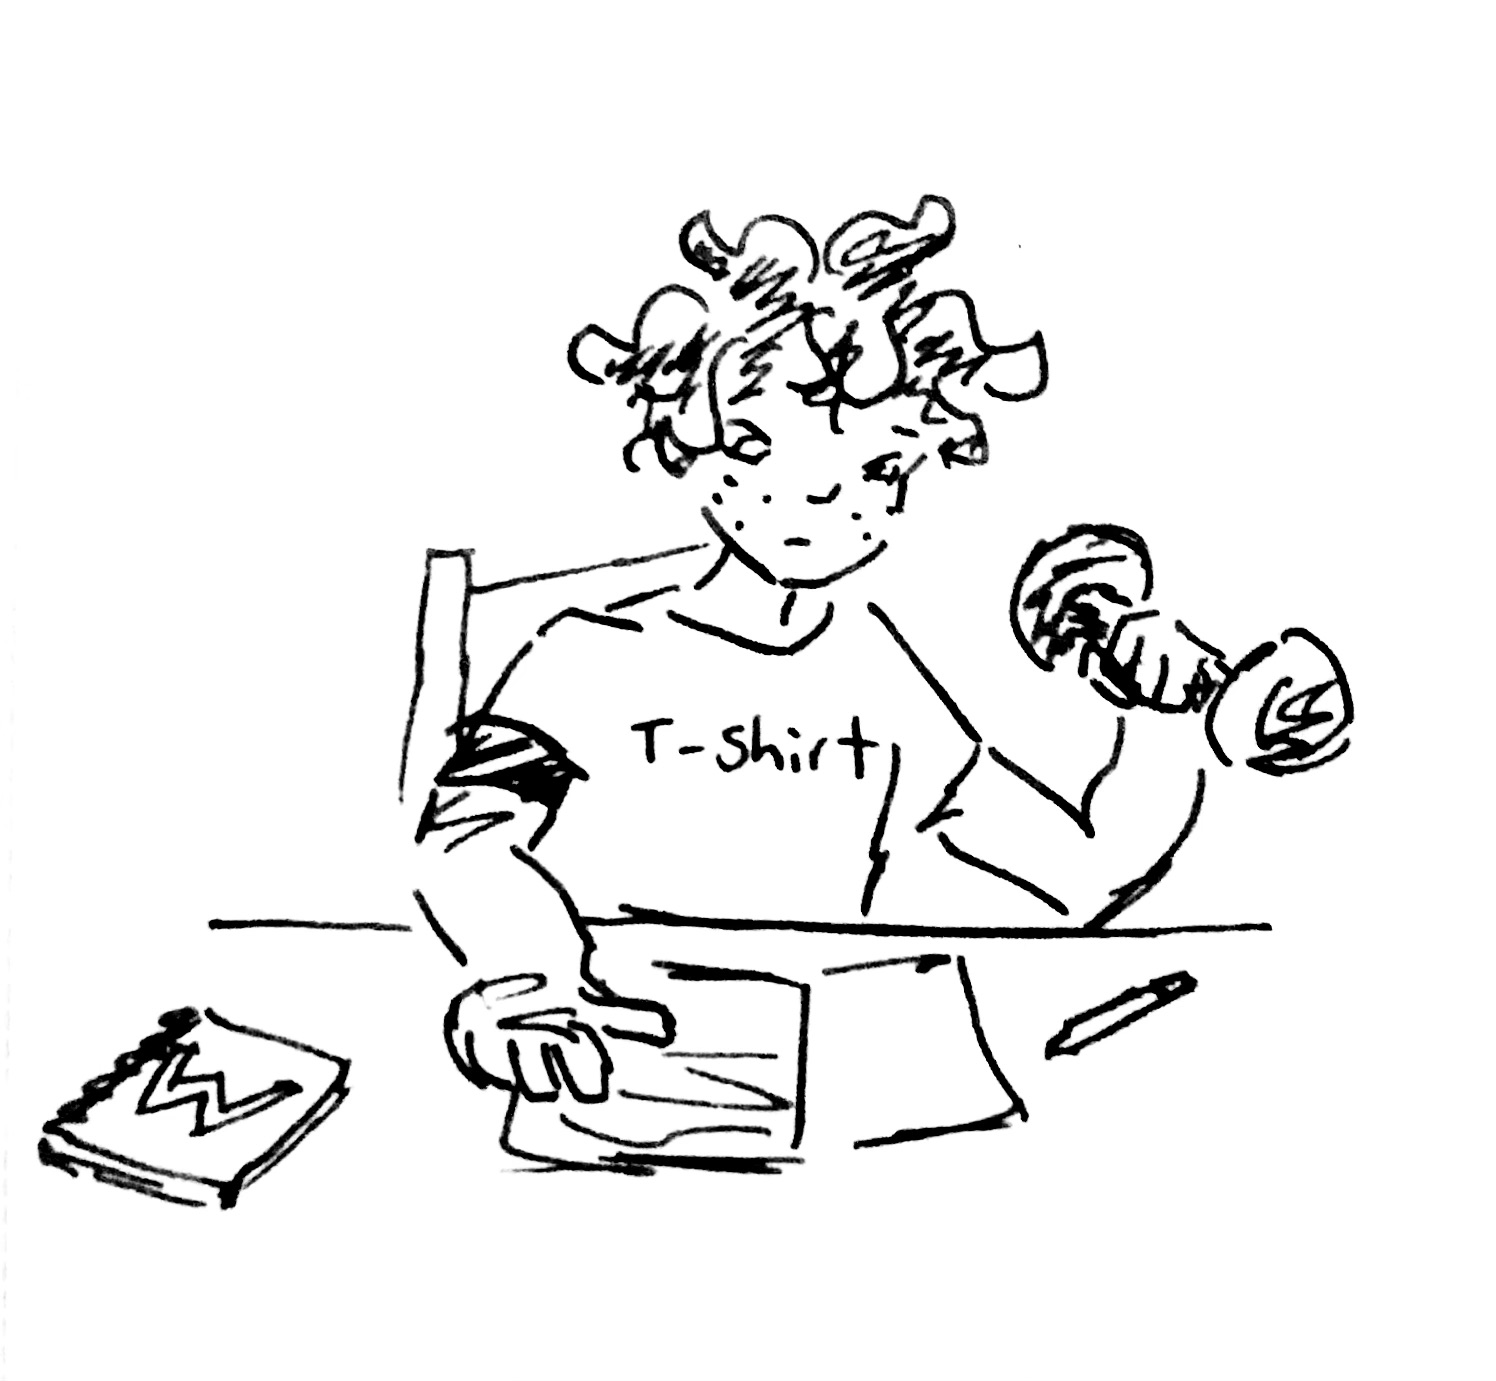 midoriya sits at a desk lifting a weight while he studies.'